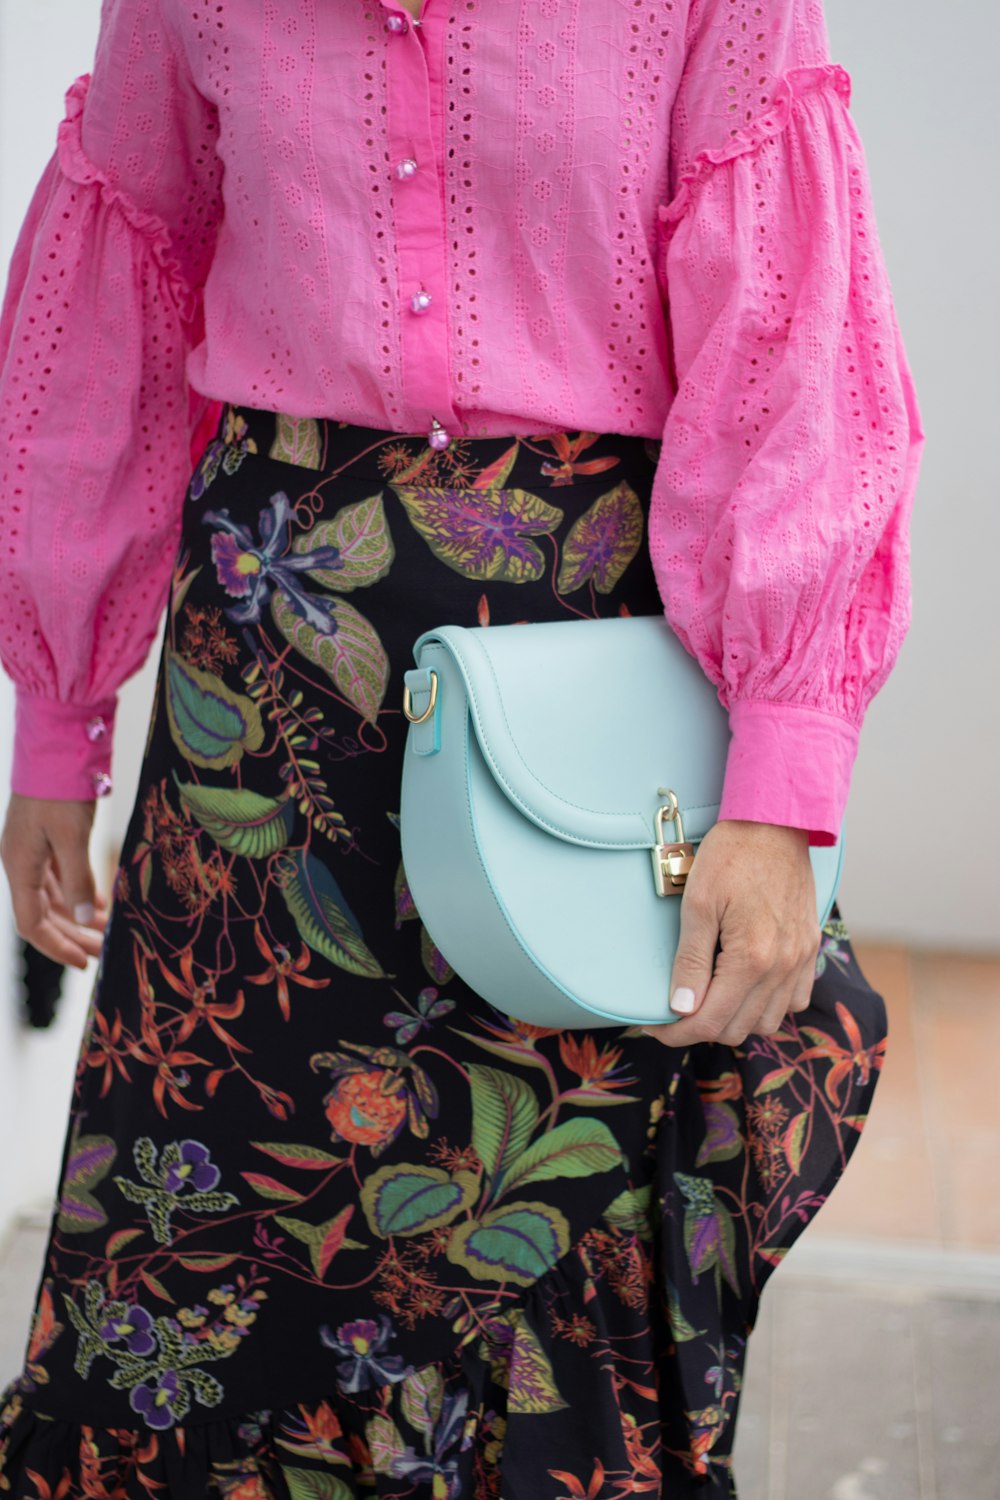 a woman wearing a pink shirt and a blue purse